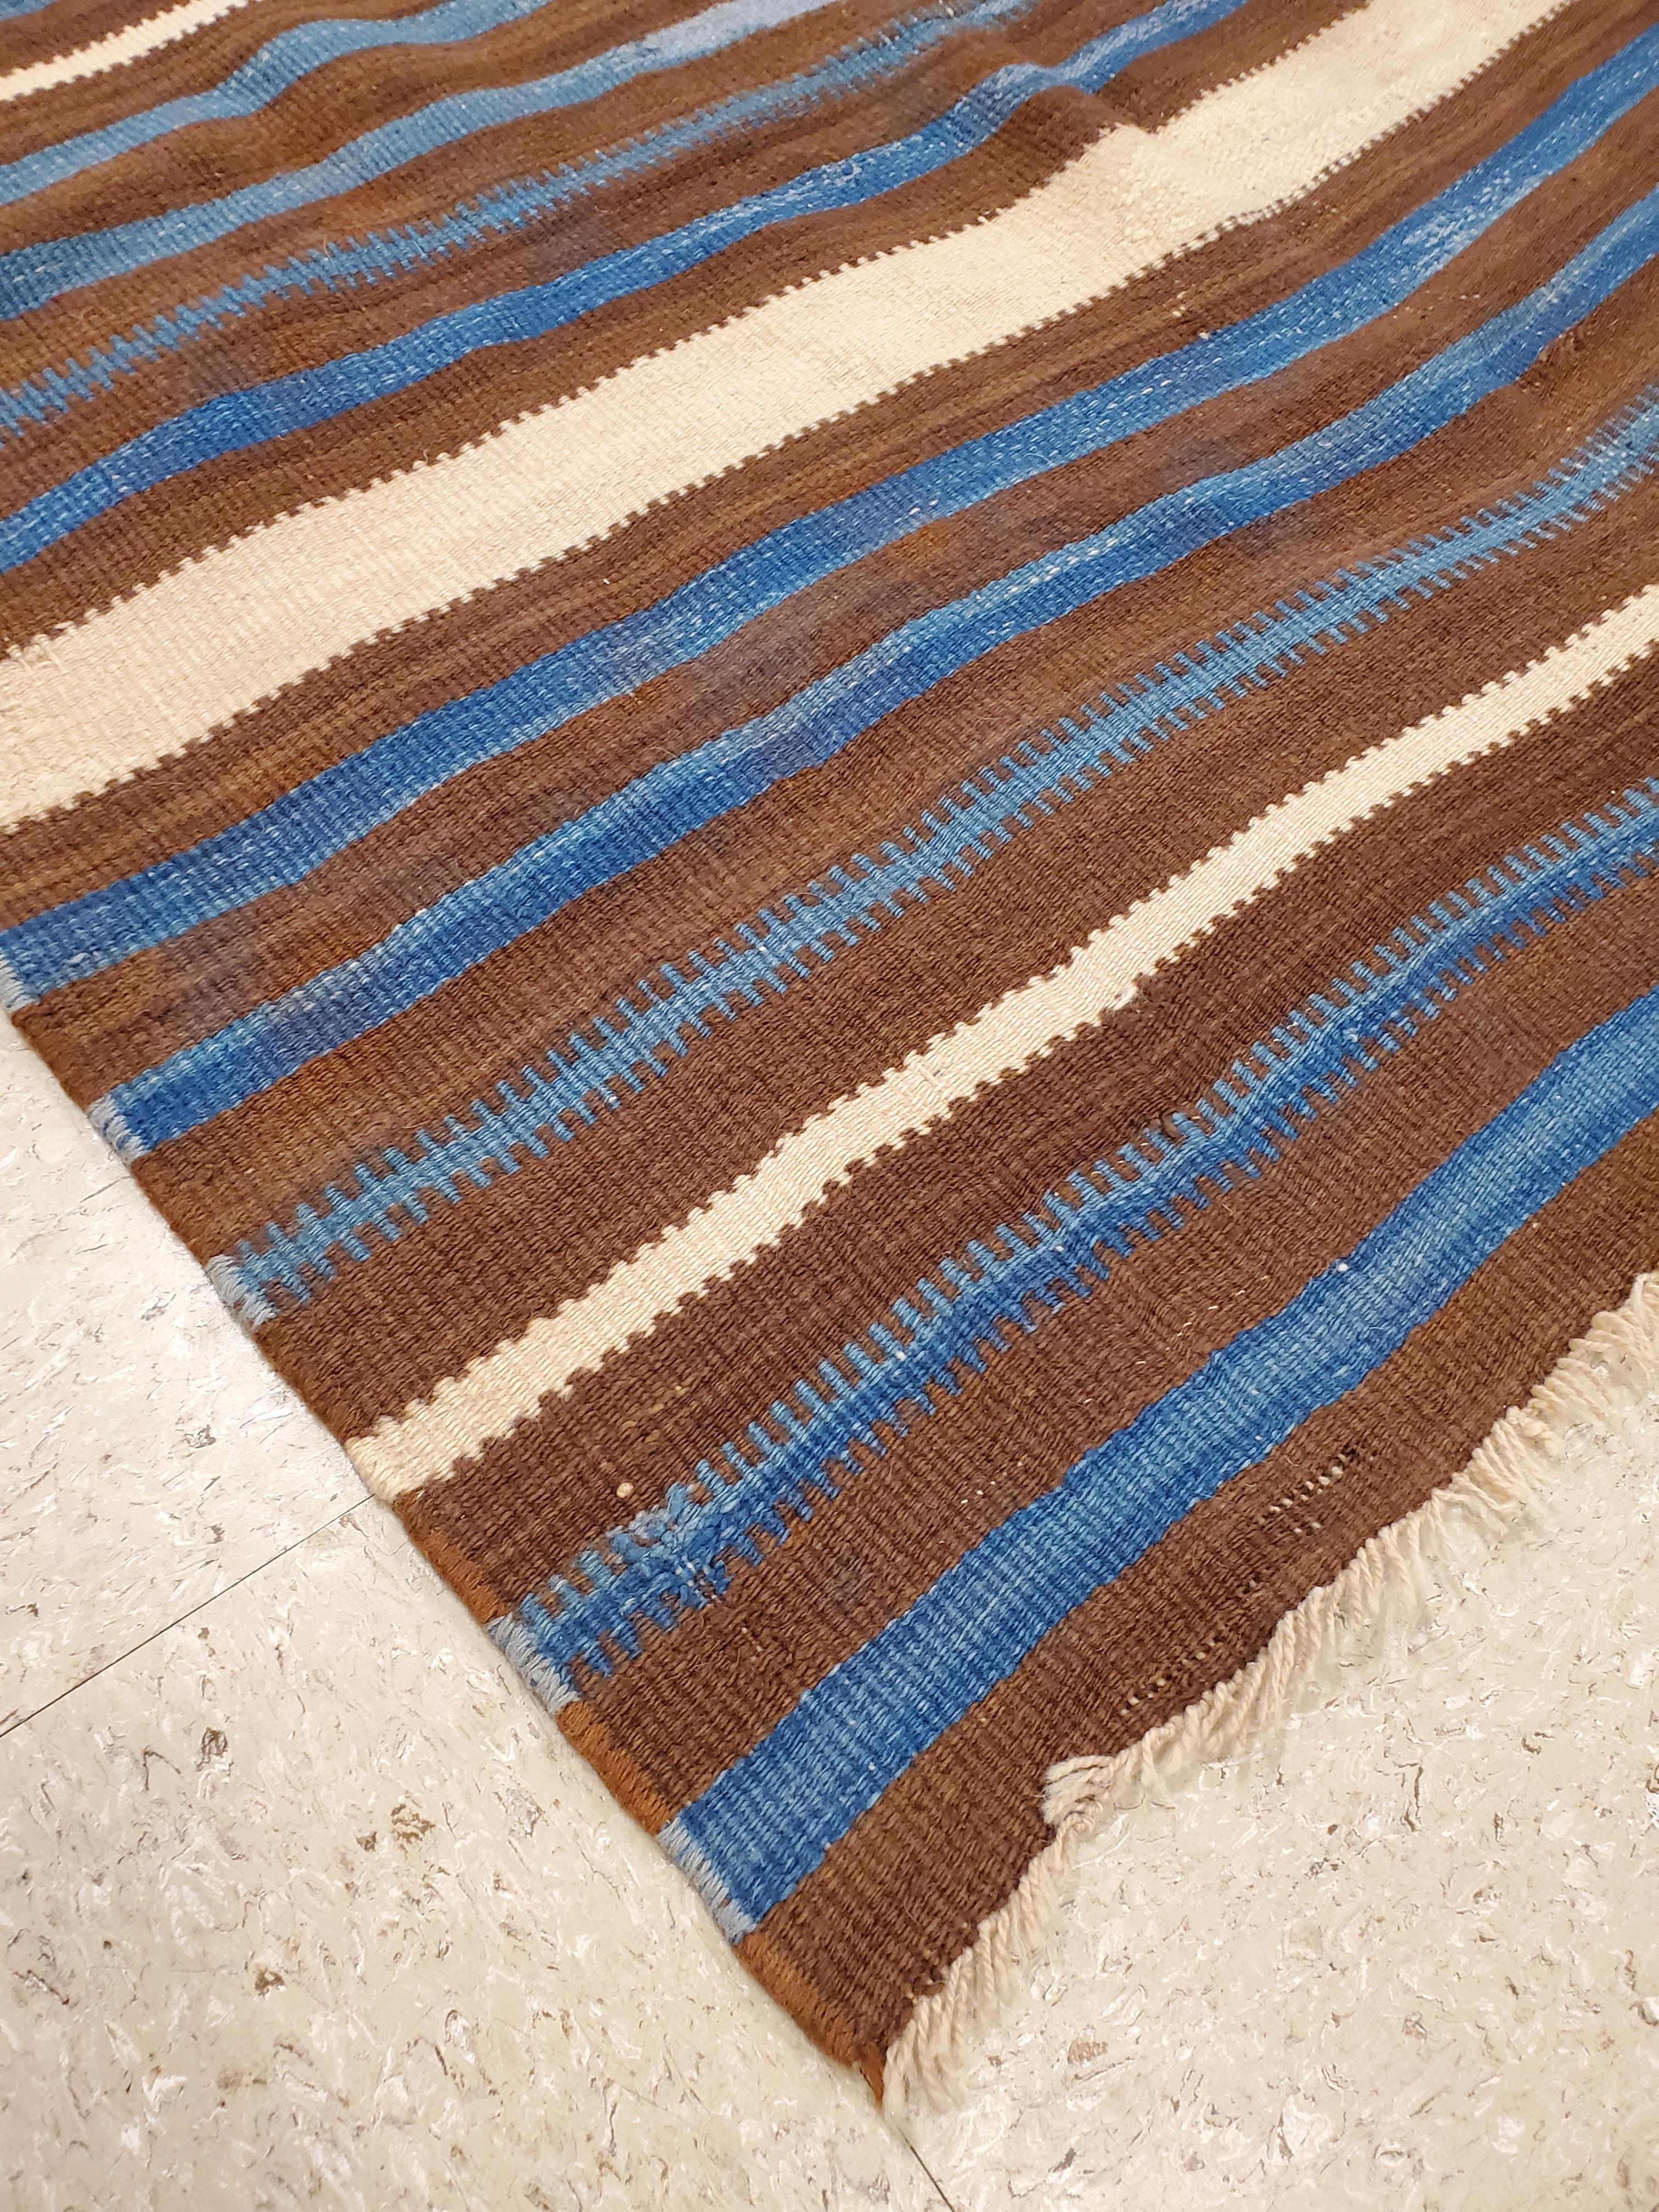 American Antique Navajo Indian Rio Grande Blanket, Handmade Rug, Folk Art, Blue For Sale